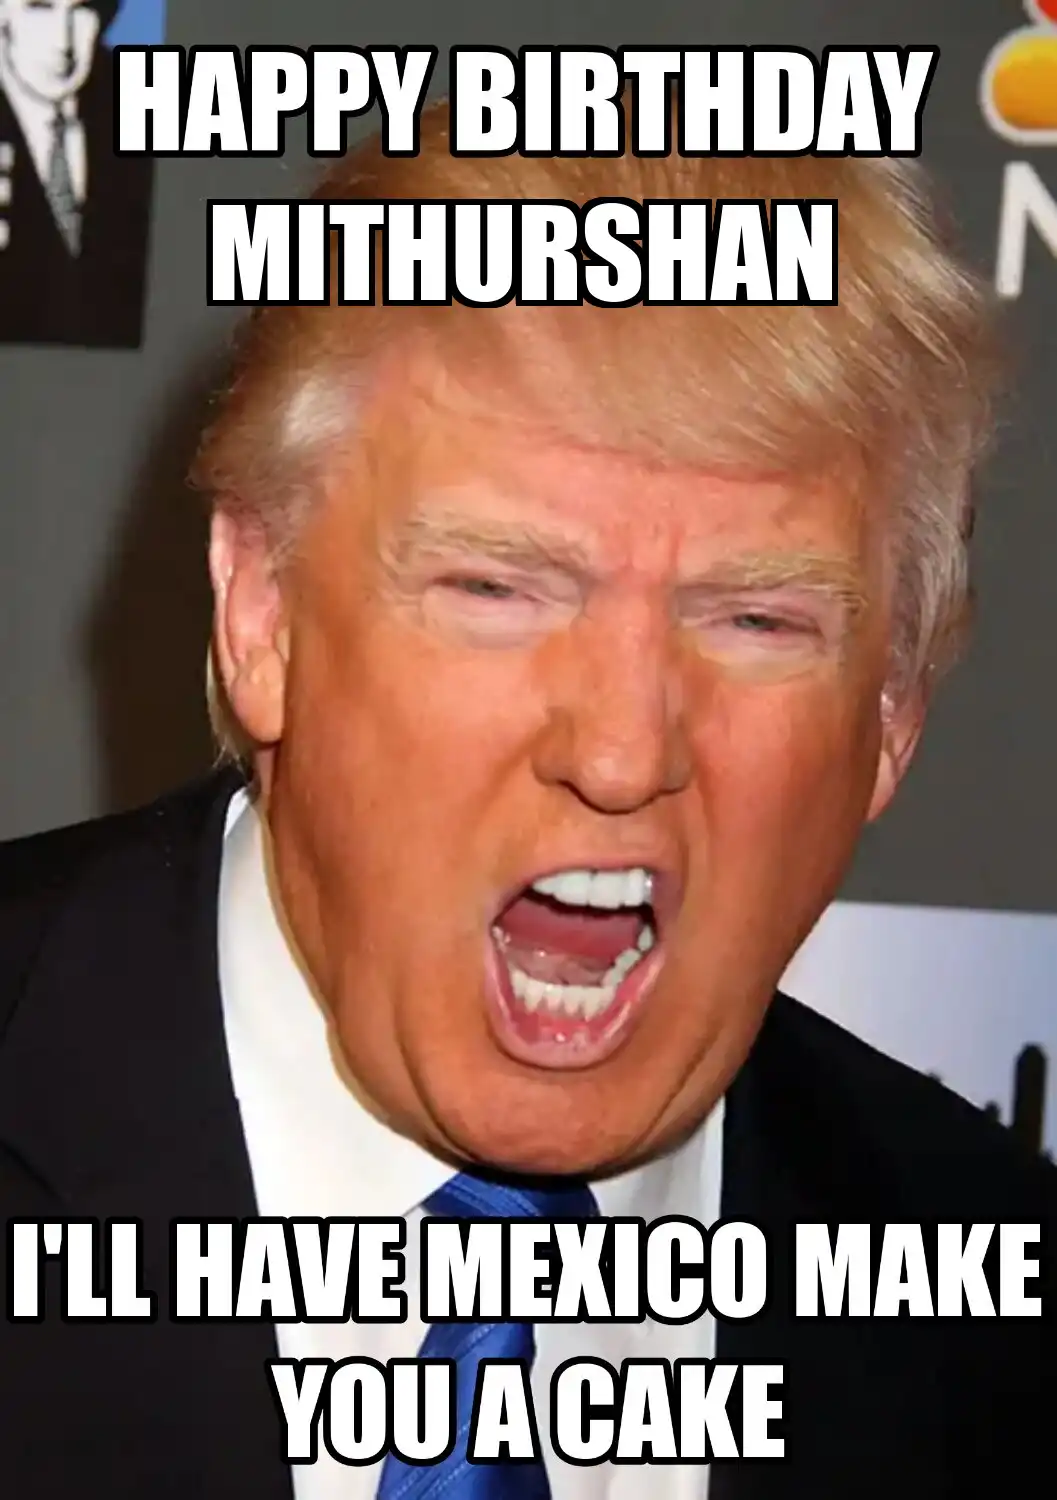 Happy Birthday Mithurshan Mexico Make You A Cake Meme